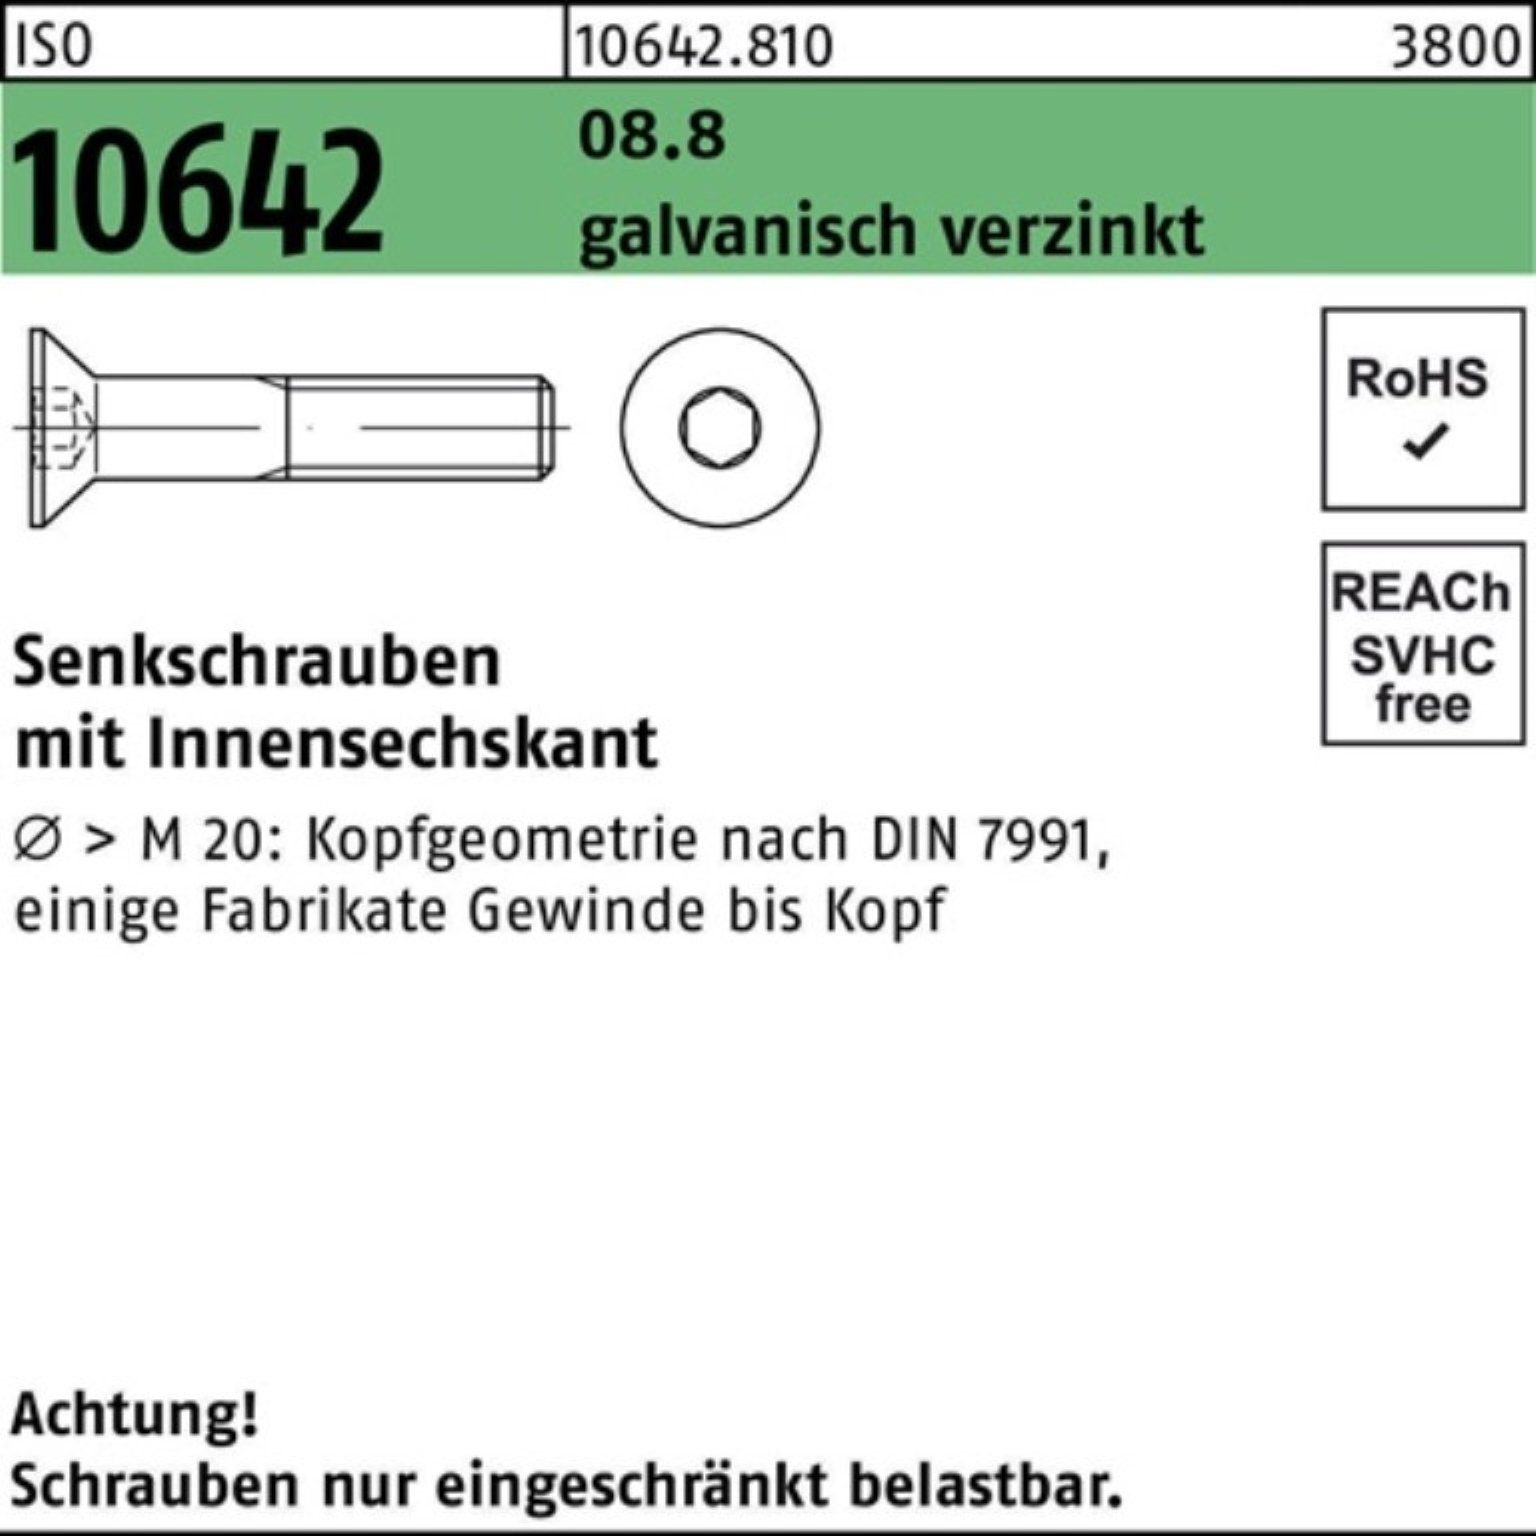 50 10642 Senkschraube ISO Reyher Innen-6kt M10x 8.8 galv.verz. 100 Pack Senkschraube 100er